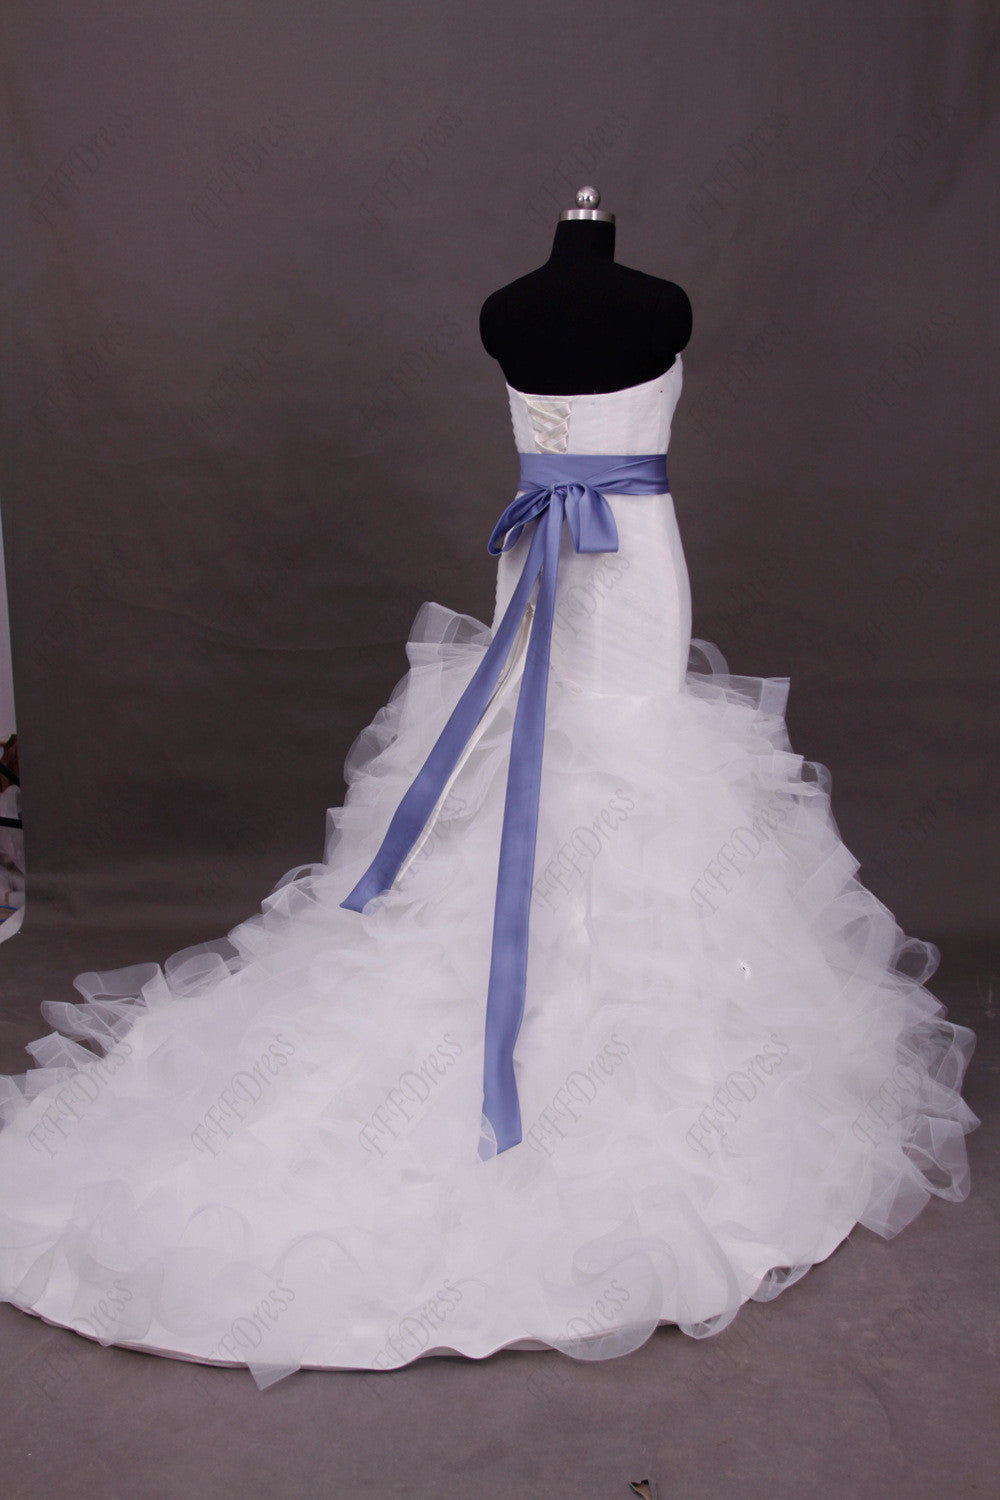 Mermaid sweetheart wedding dress with ruffled skirt and wide trim